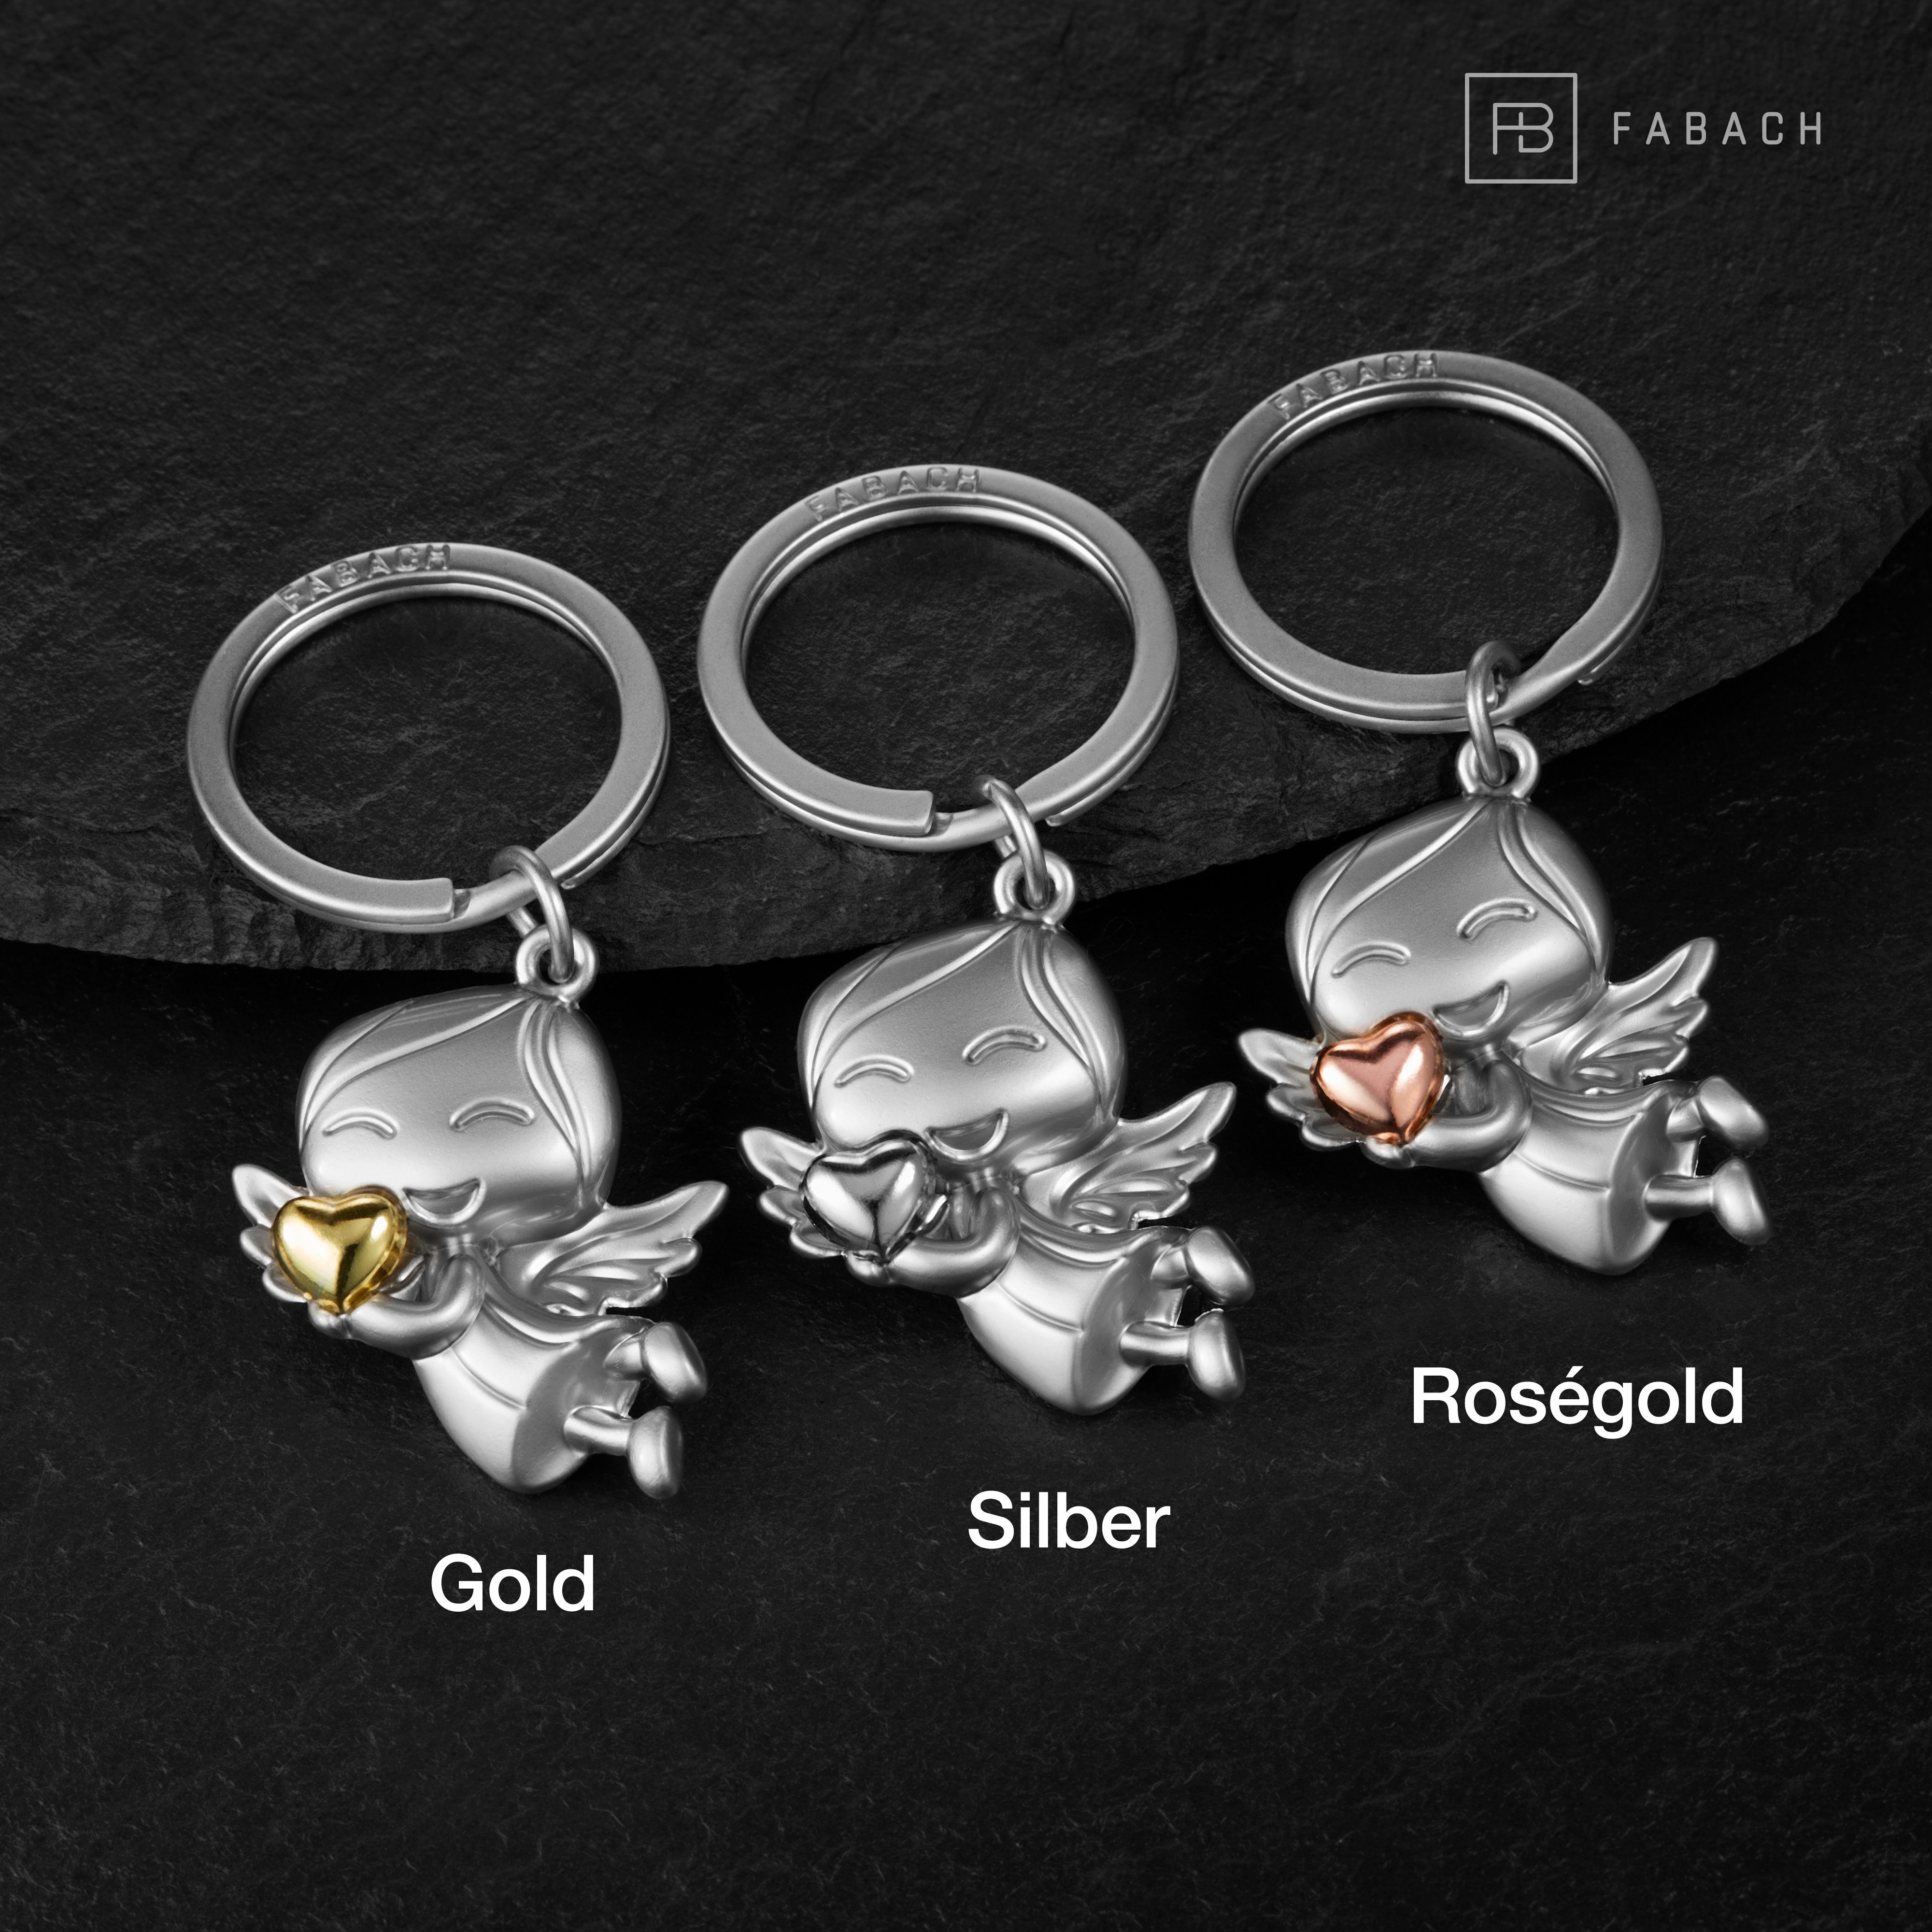 Herz - Glücksbringer Glücksengel Schlüsselanhänger Schutzengel mit "Lucky" - Roségold FABACH Engel